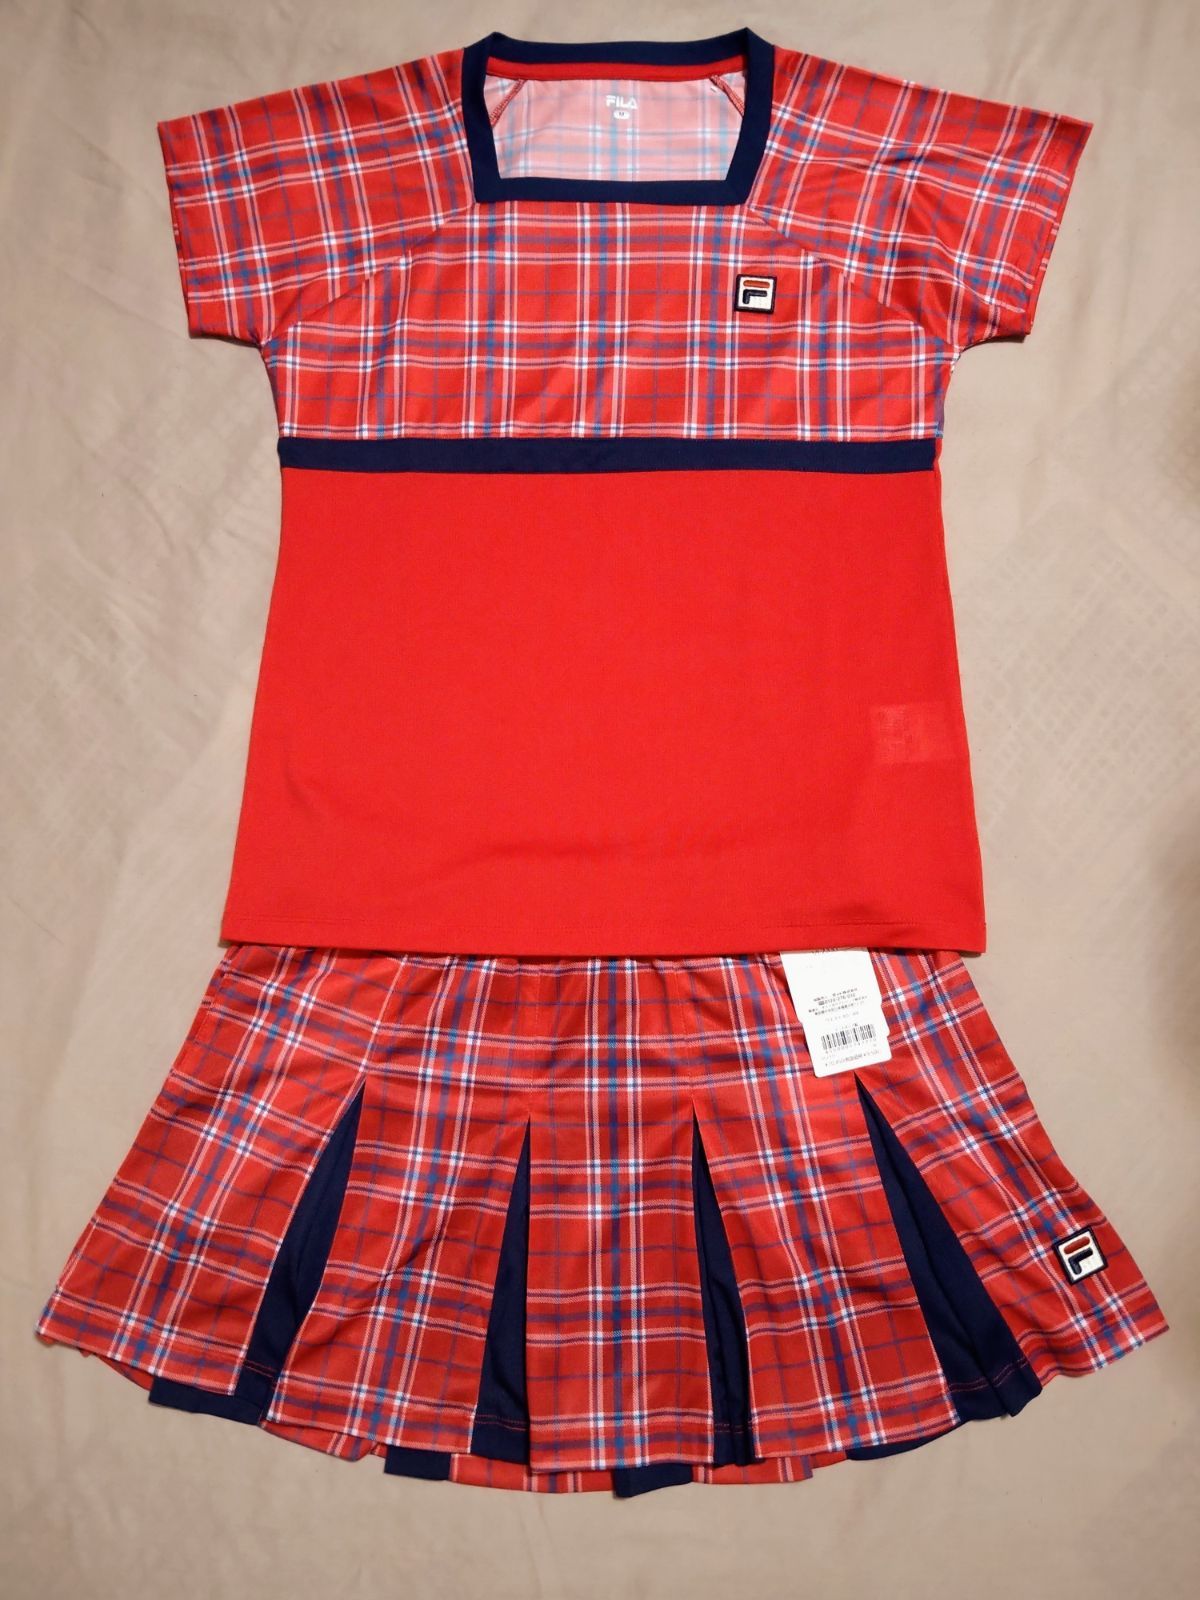 FILA　フィラ　テニスウェア　ゲームシャツ　Mサイズ　赤　チェック柄　美品